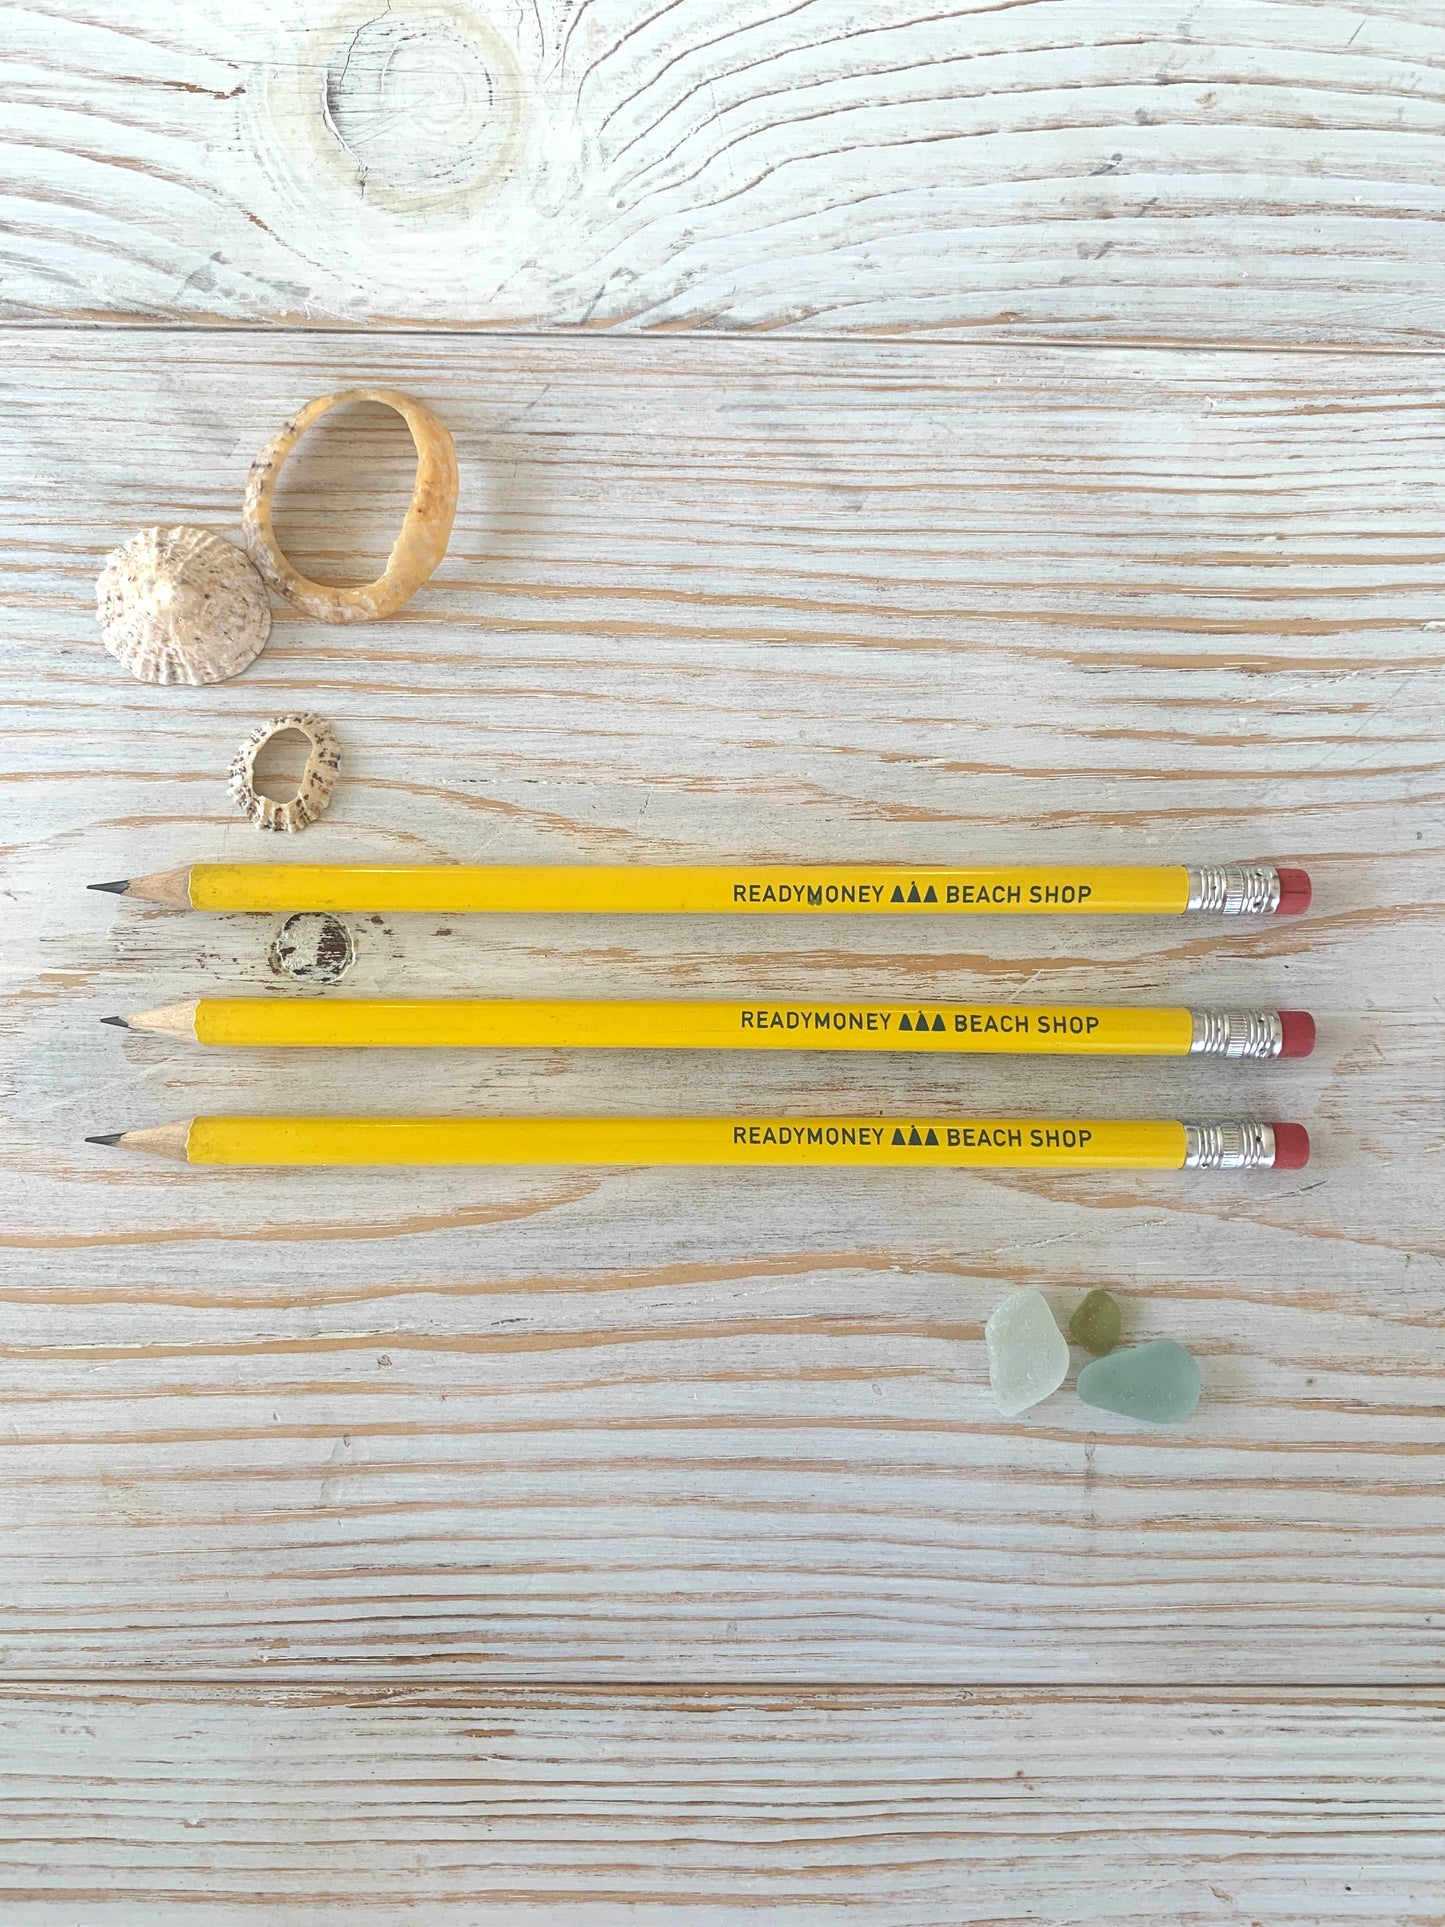 readymoney beach shop pencils